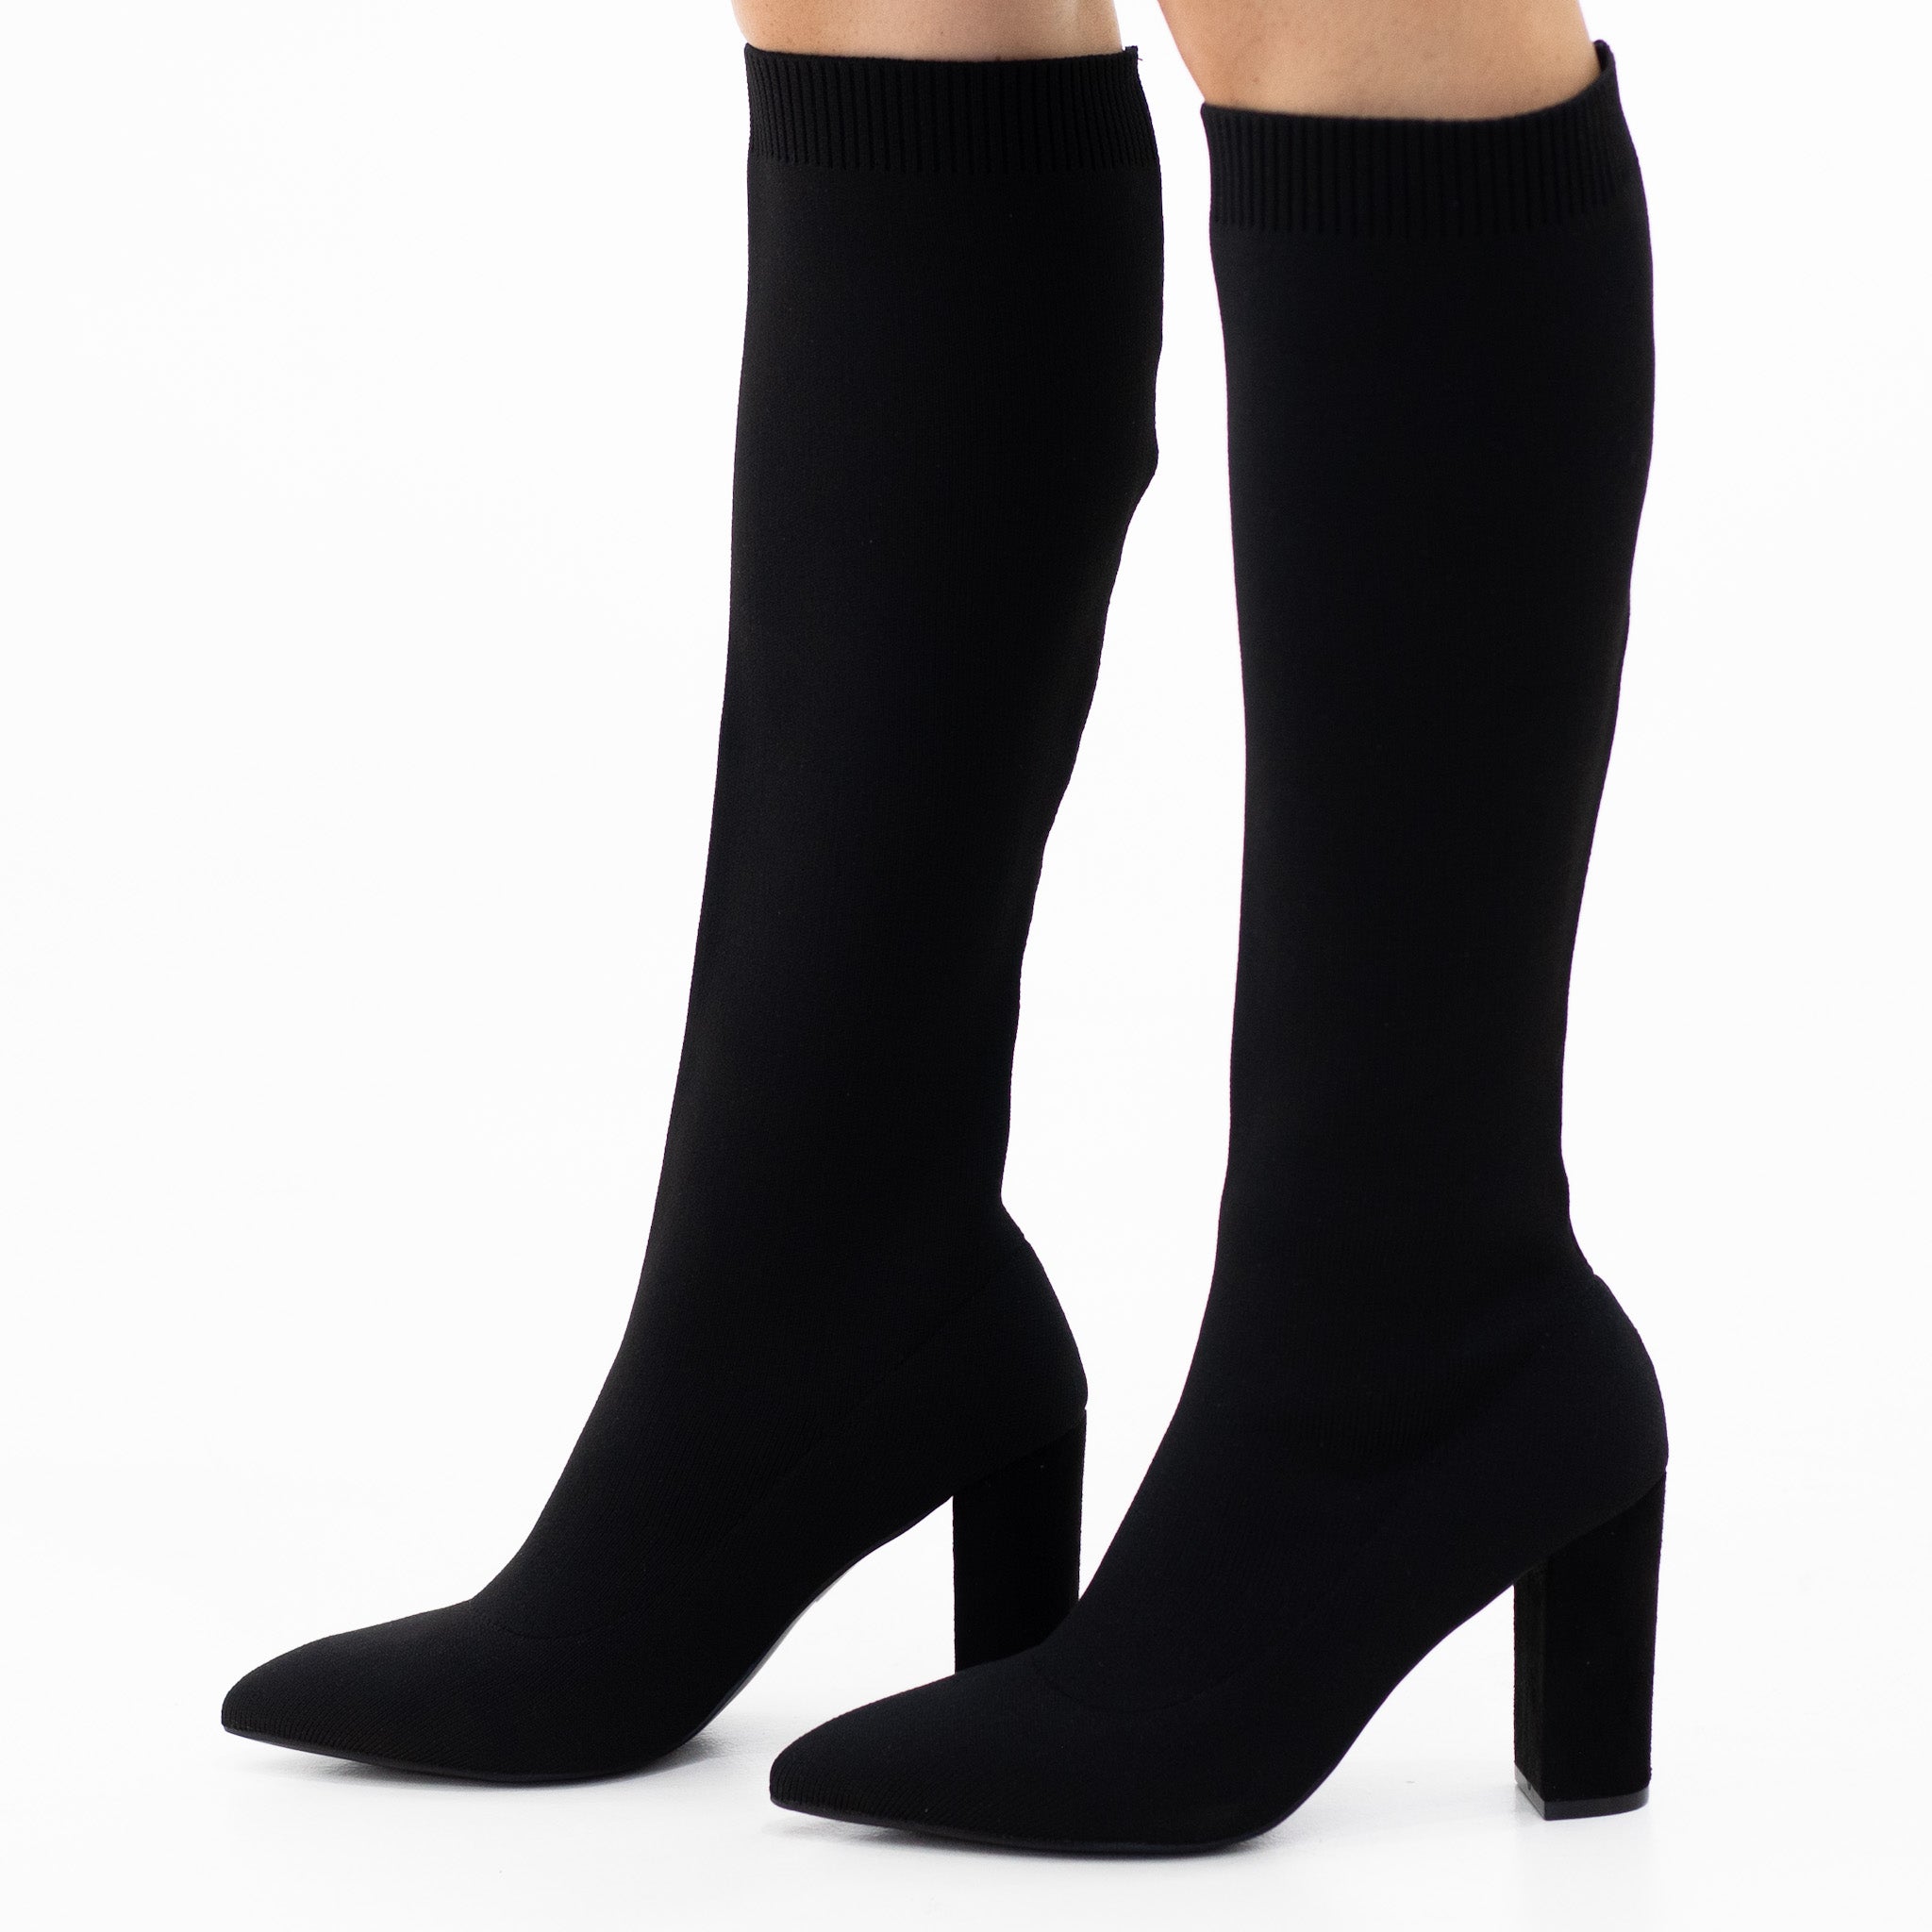 Black stretch fabric knee high boot on a 9cm heel vadisa